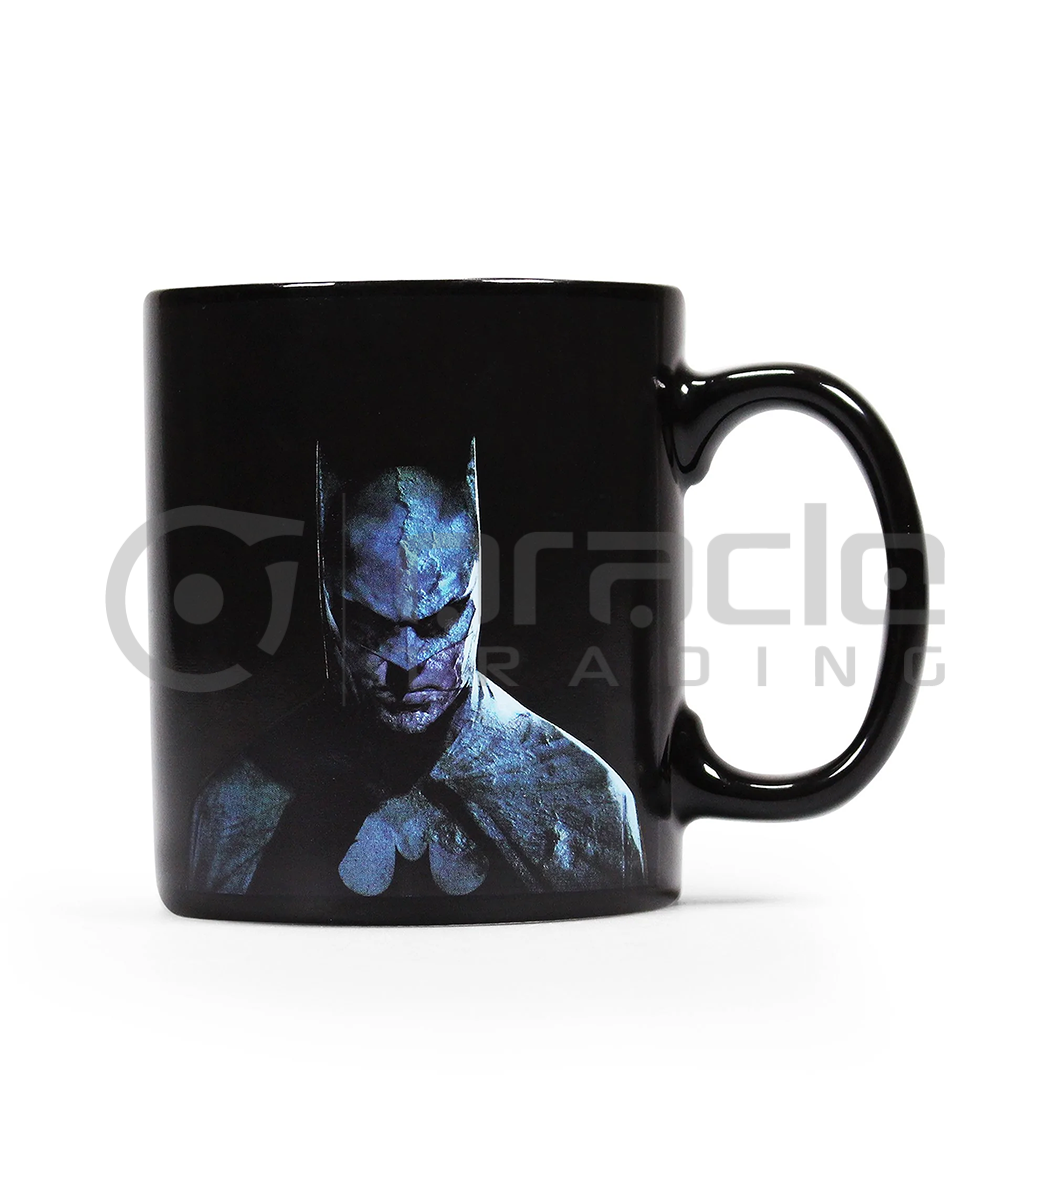 heat reveal mug batman villains hrm037 c